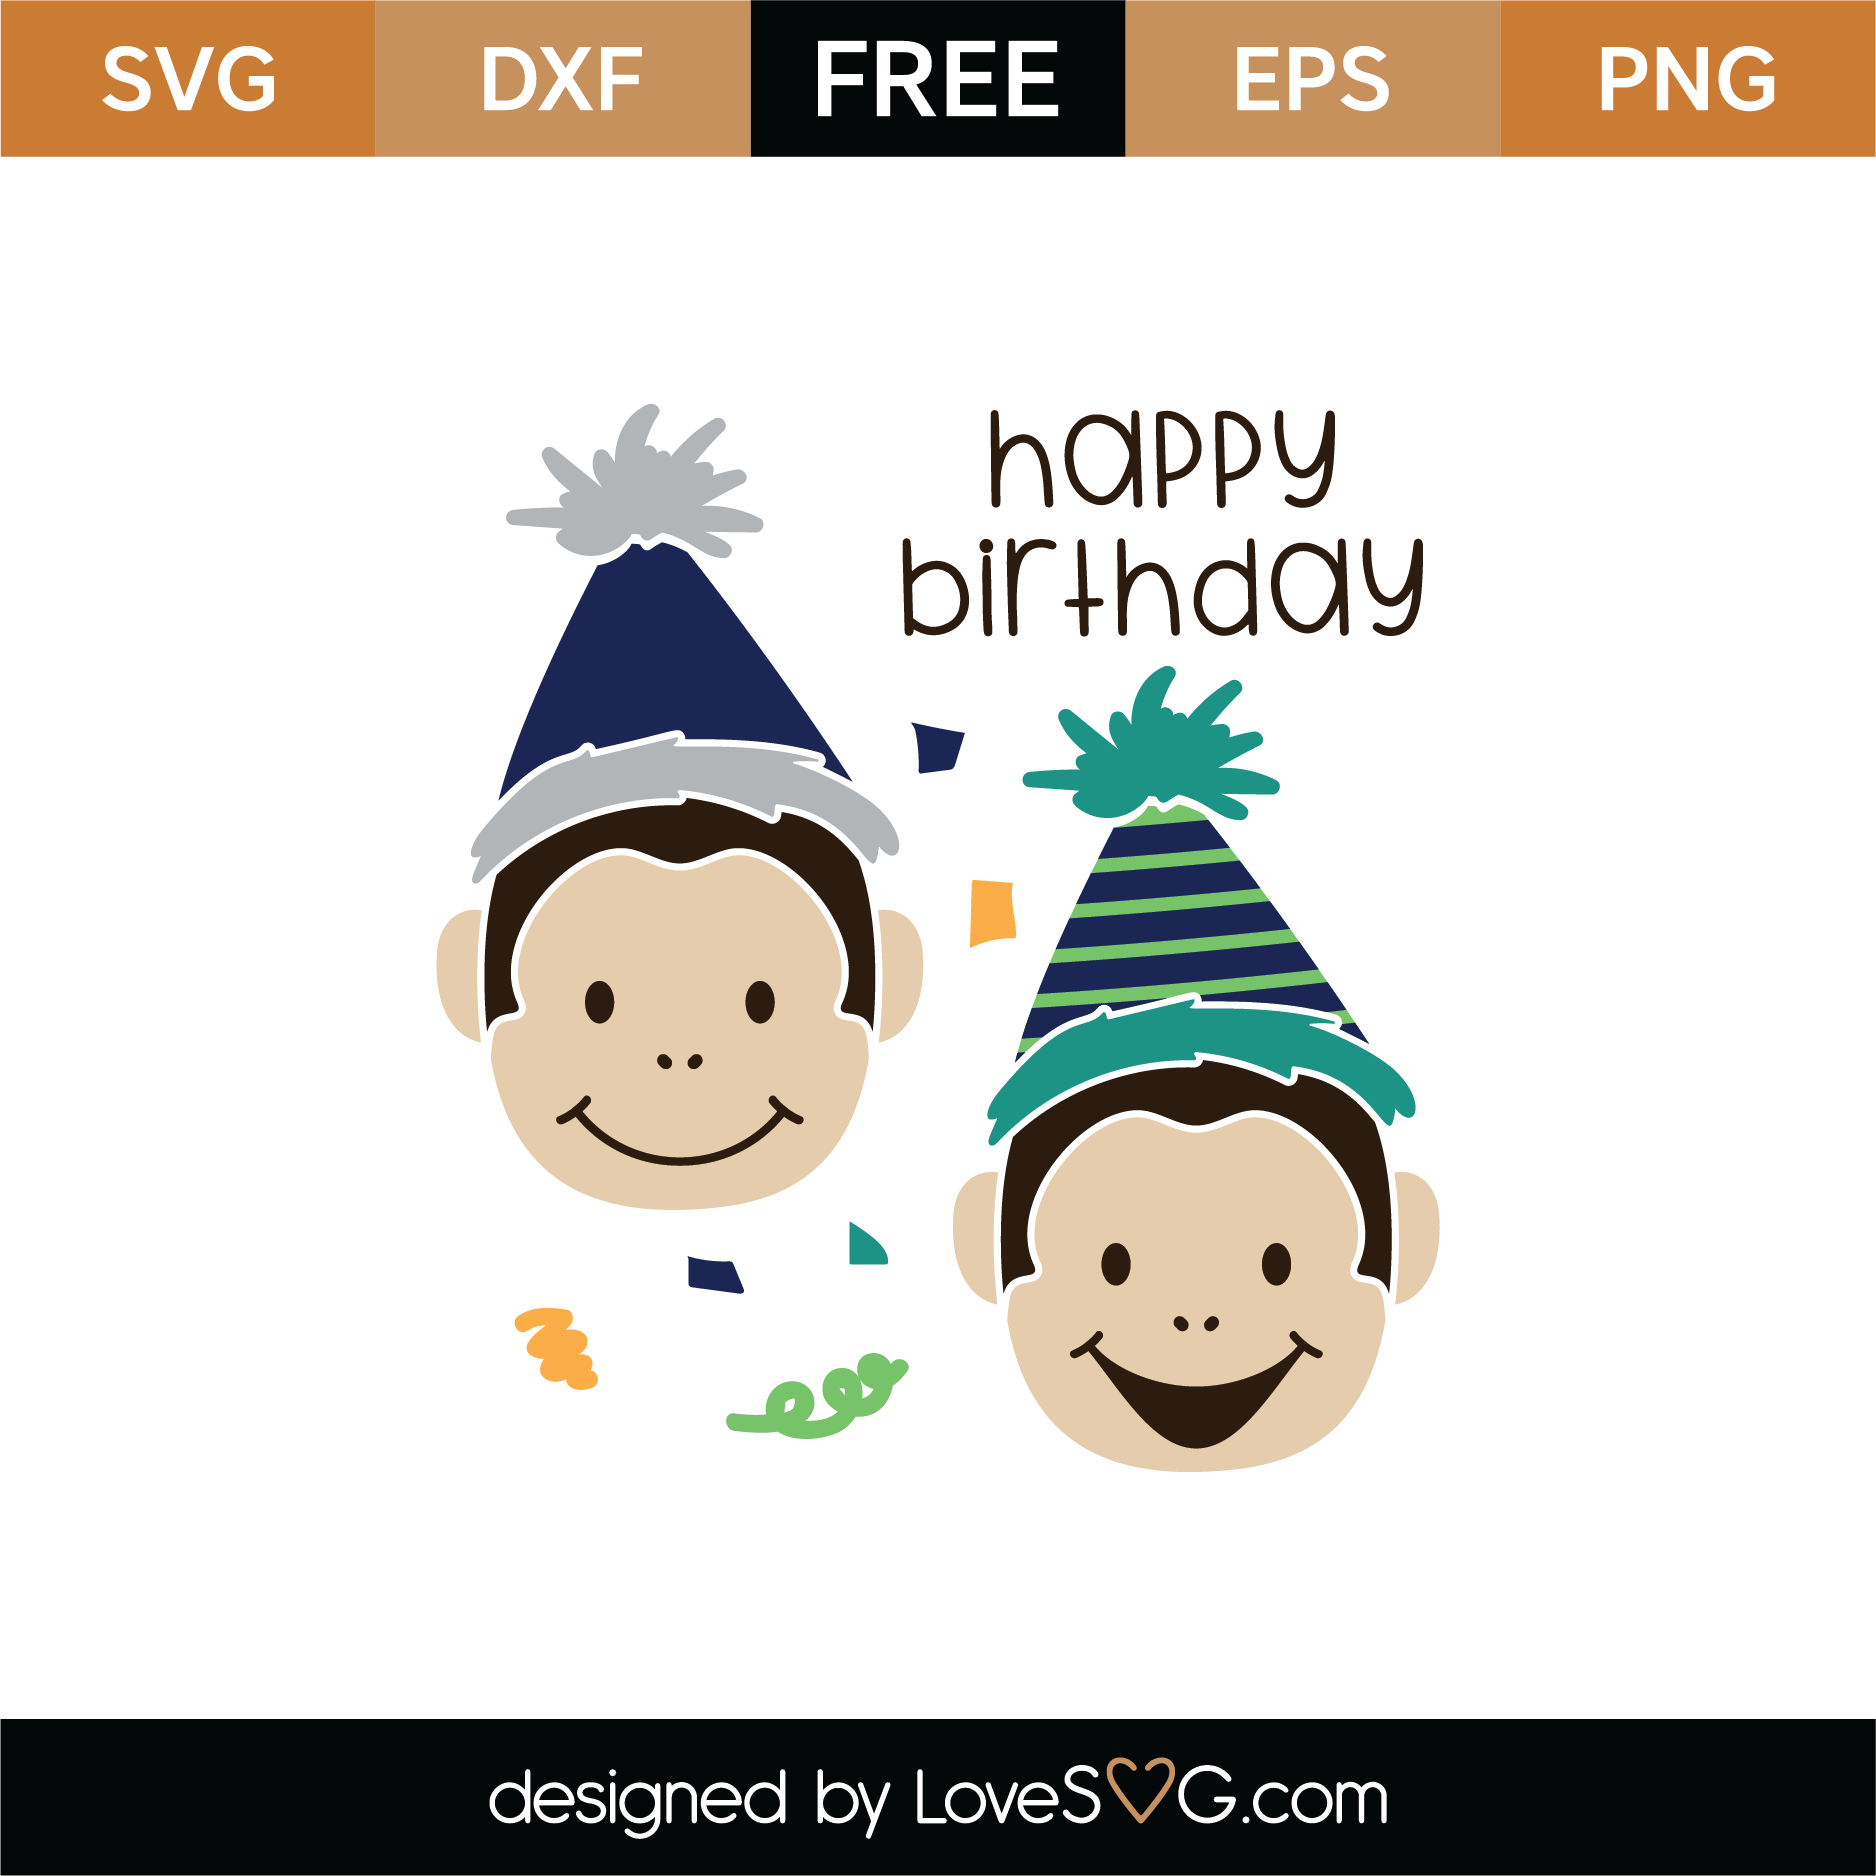 Download Free Happy Birthday Monkeys SVG Cut File | Lovesvg.com